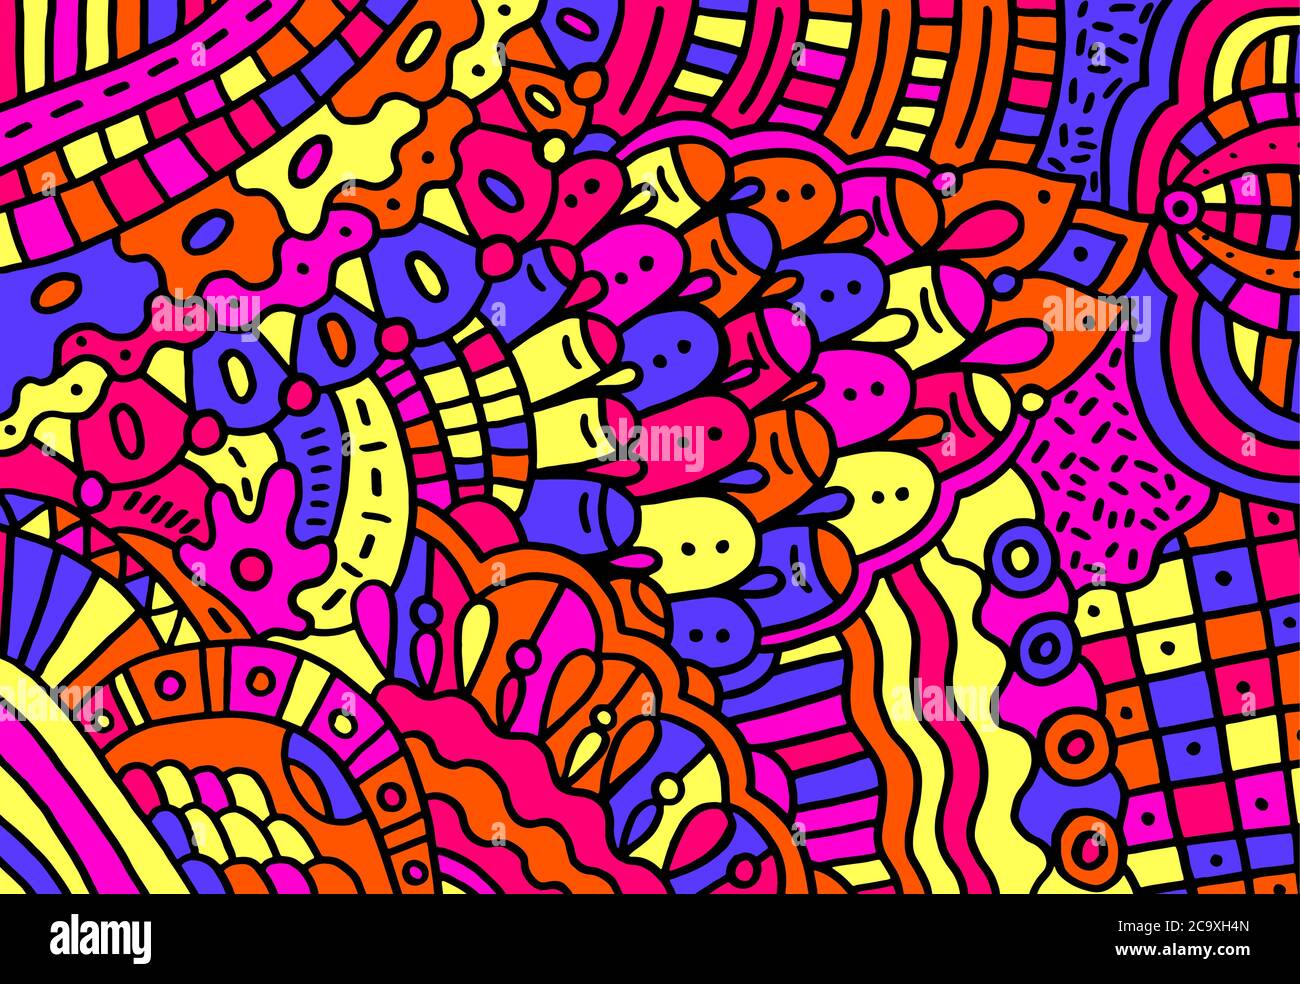 Doodle bunte Cartoon-Muster.Trippy Hintergrund mit floralen abstrakten Motiven. Psychedelische Textur. Zentangle-Muster. Vektorgrafik. Stock Vektor